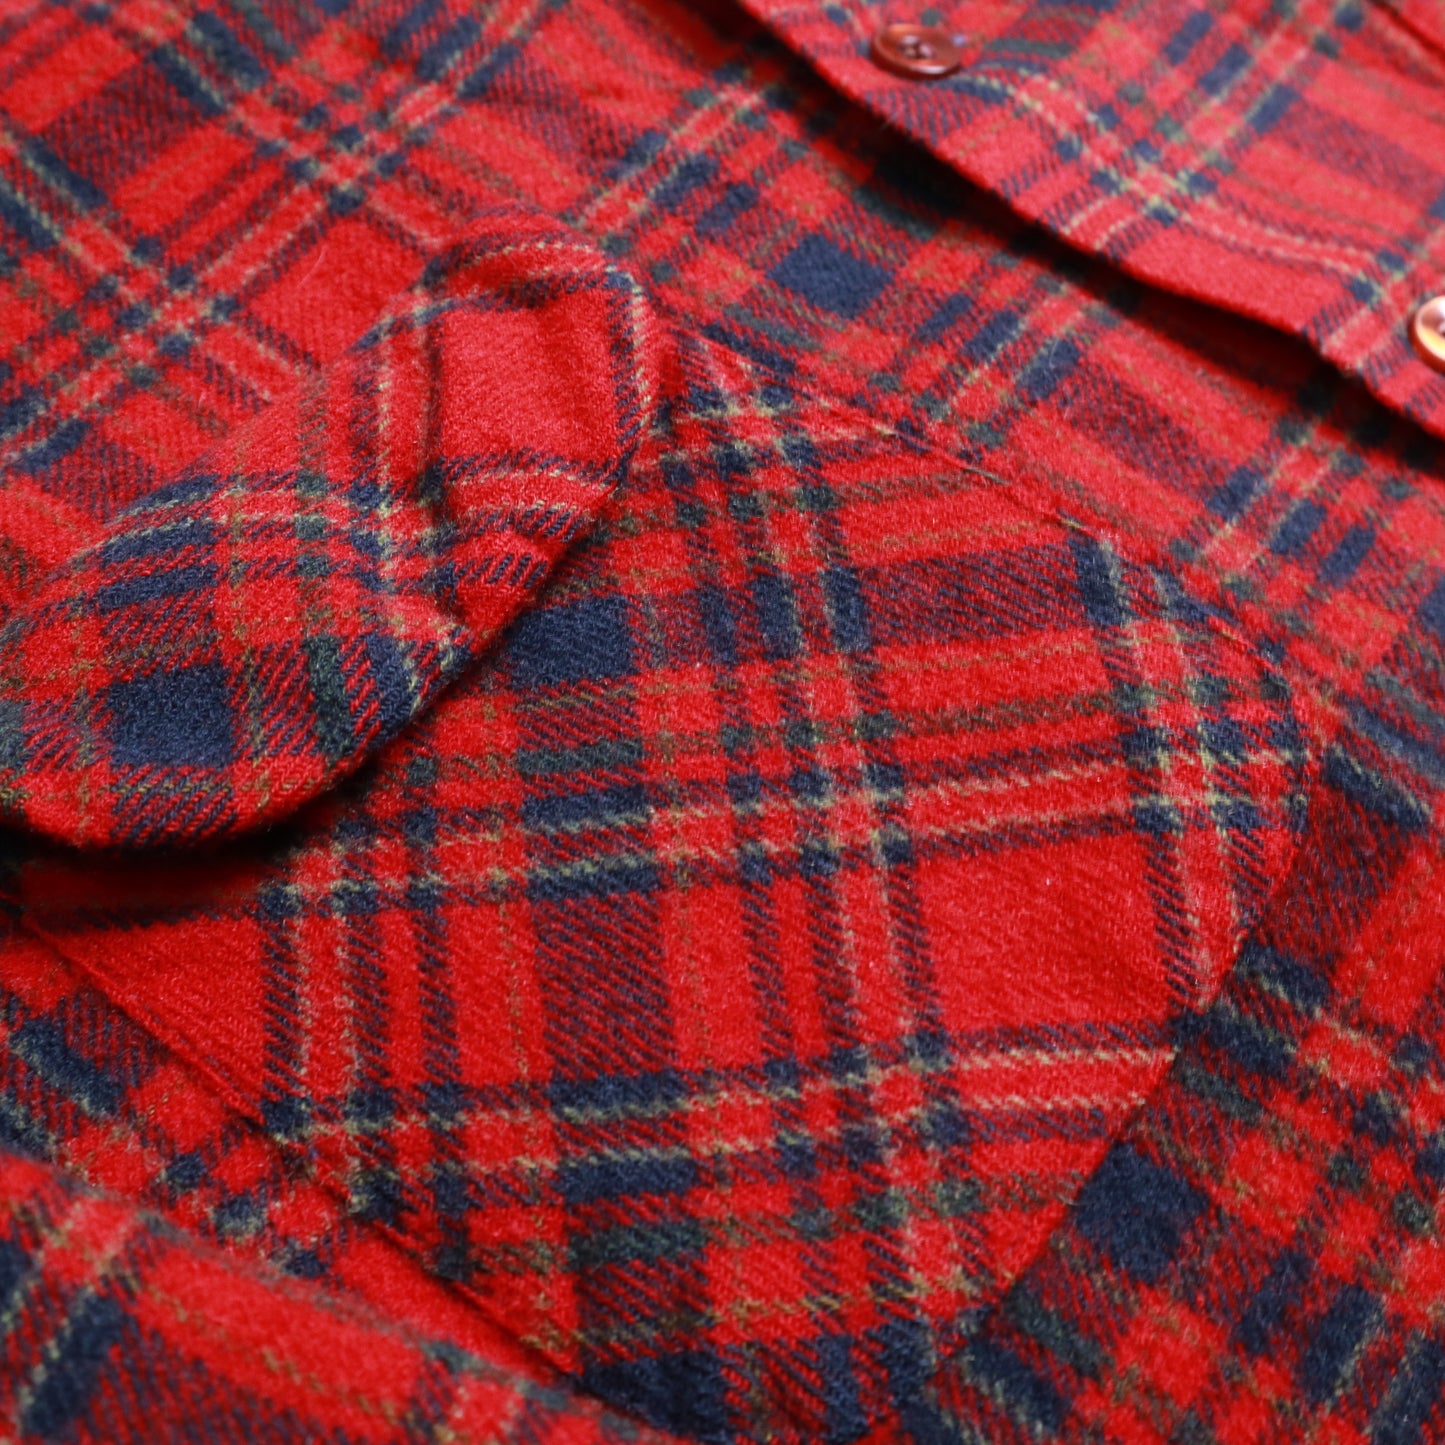 1960s Pendleton Red Check Wool Shirt